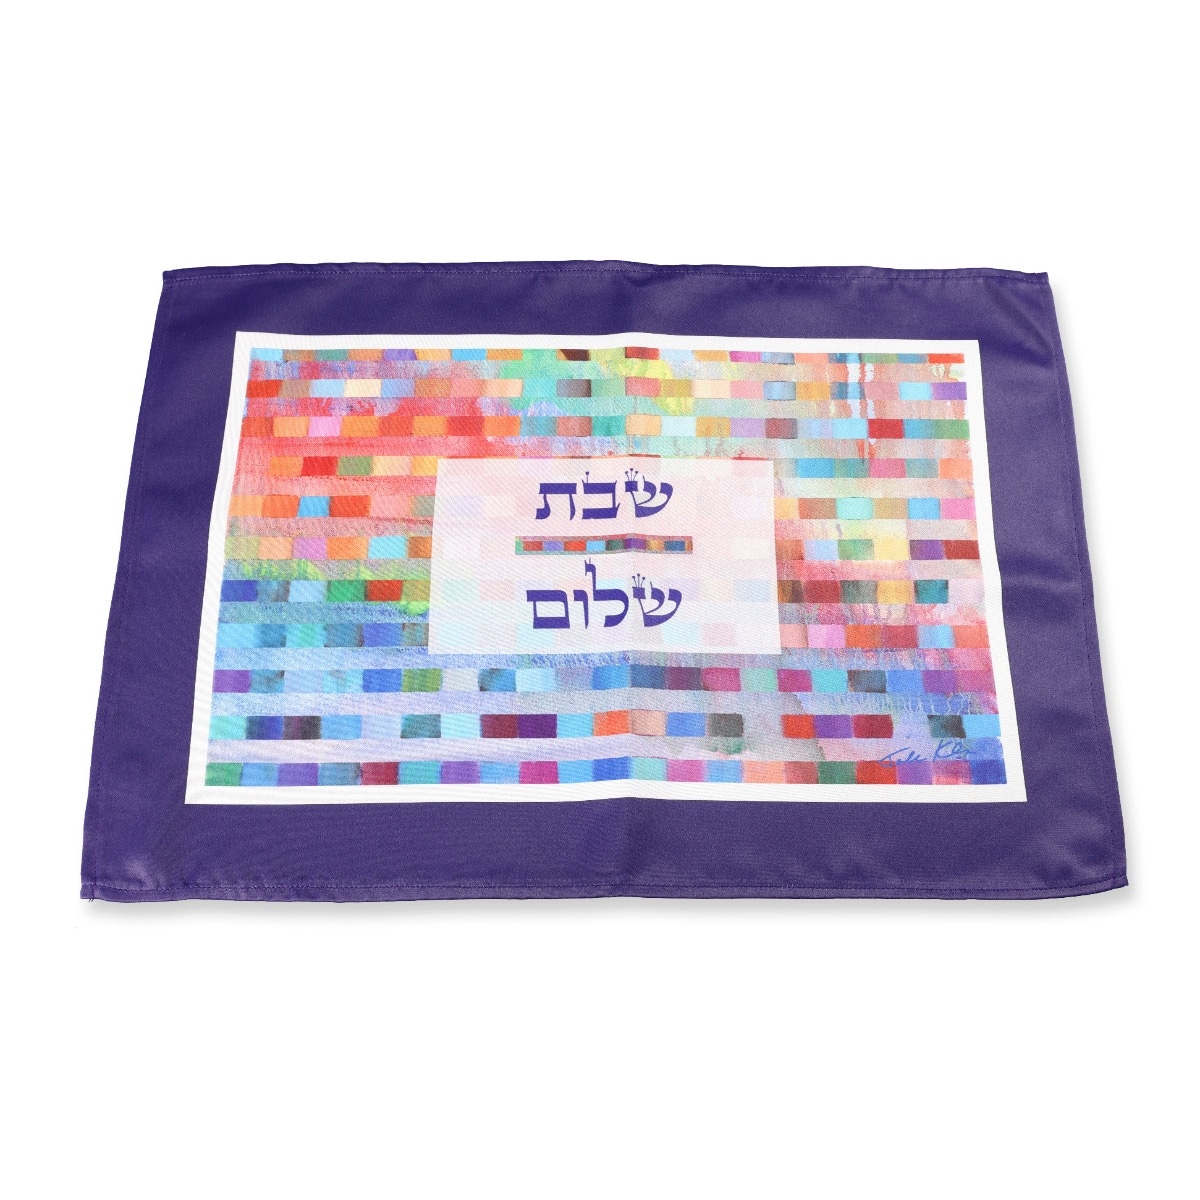 Jordana Klein "Shabbat Rainbow" Challah Cover - 1